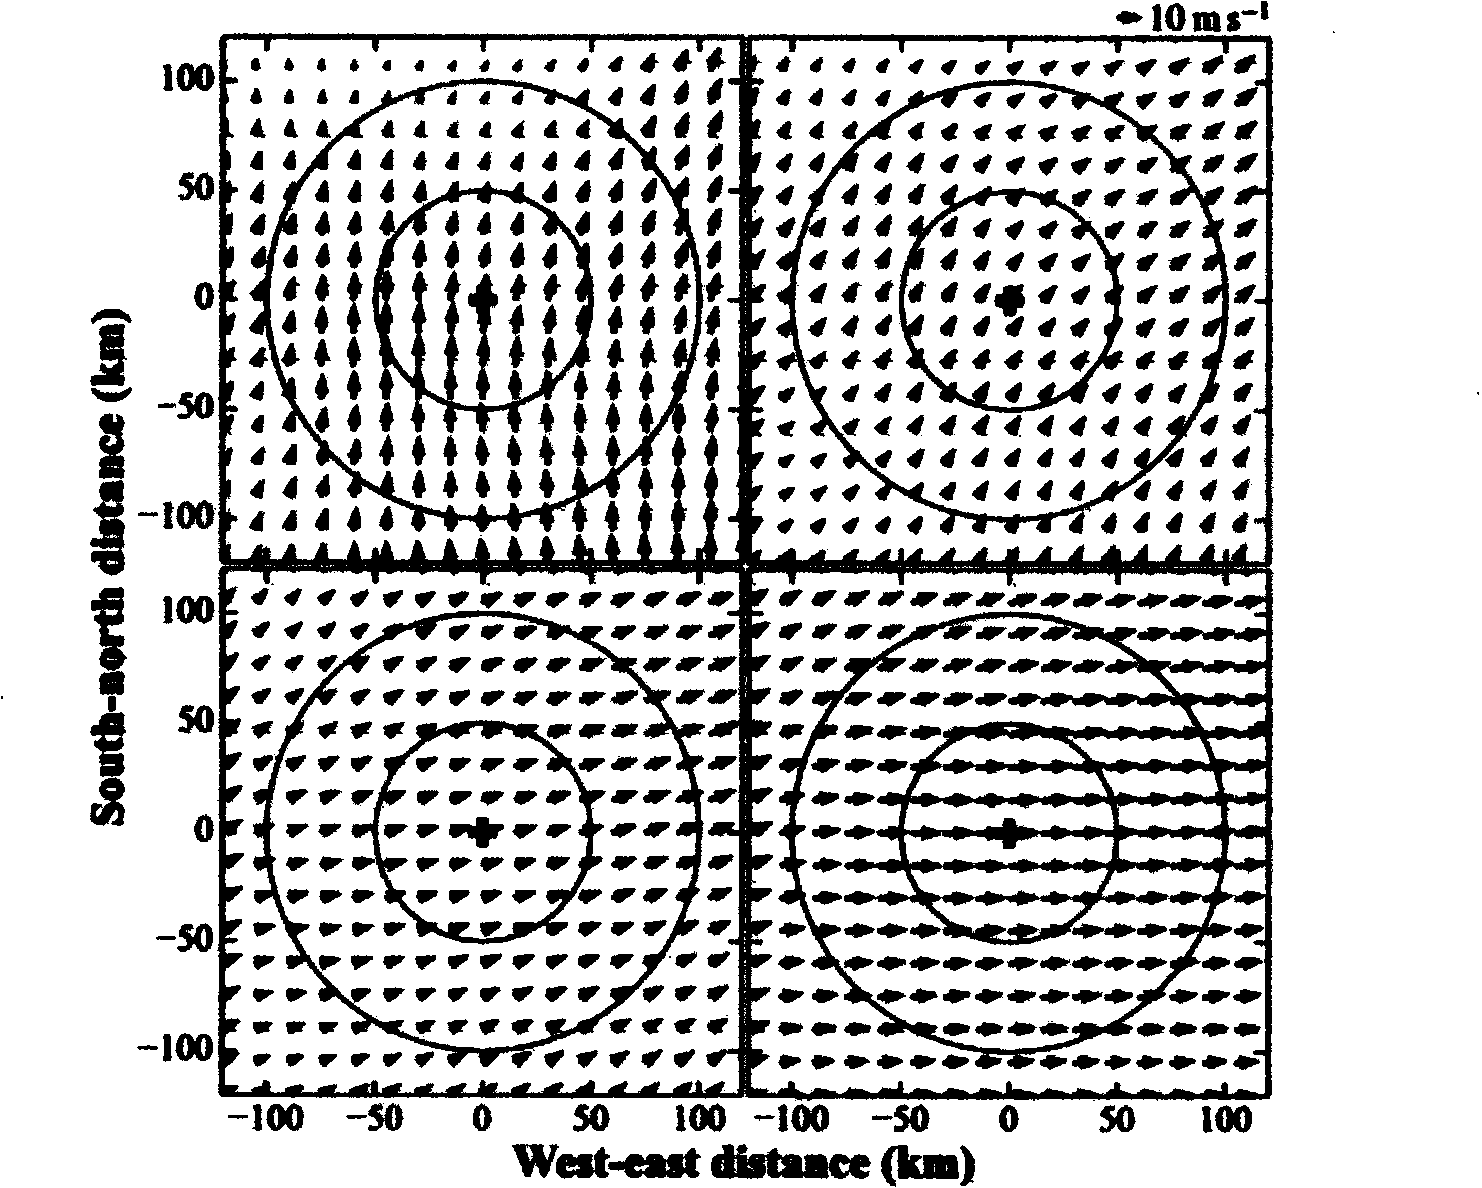 Vertical wind profile nonlinear inversion method based on Doppler weather radar